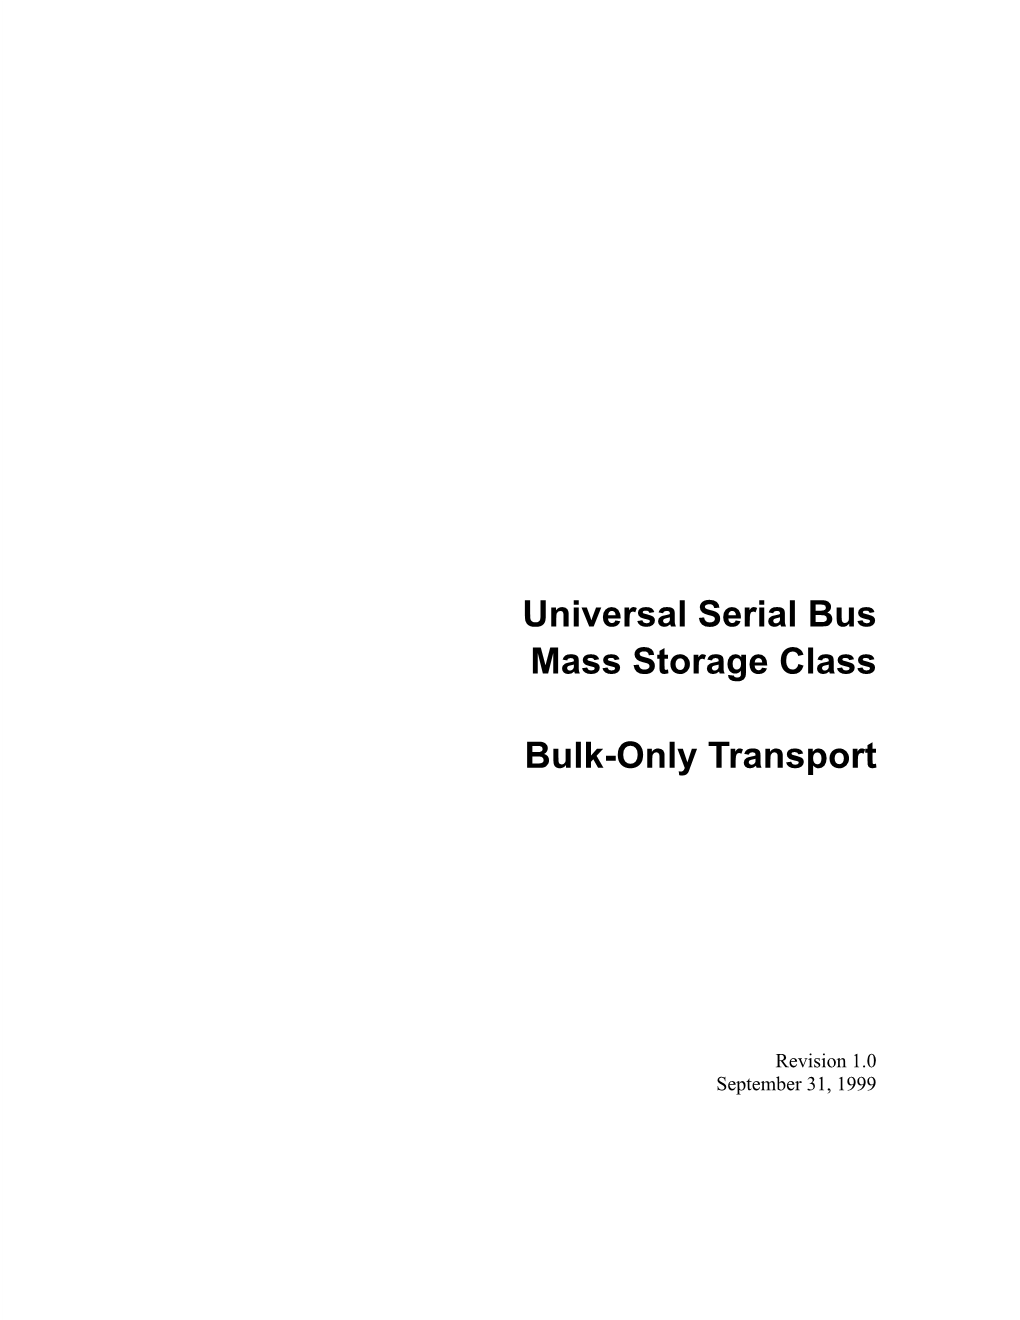 Universal Serial Bus Mass Storage Class Bulk-Only Transport